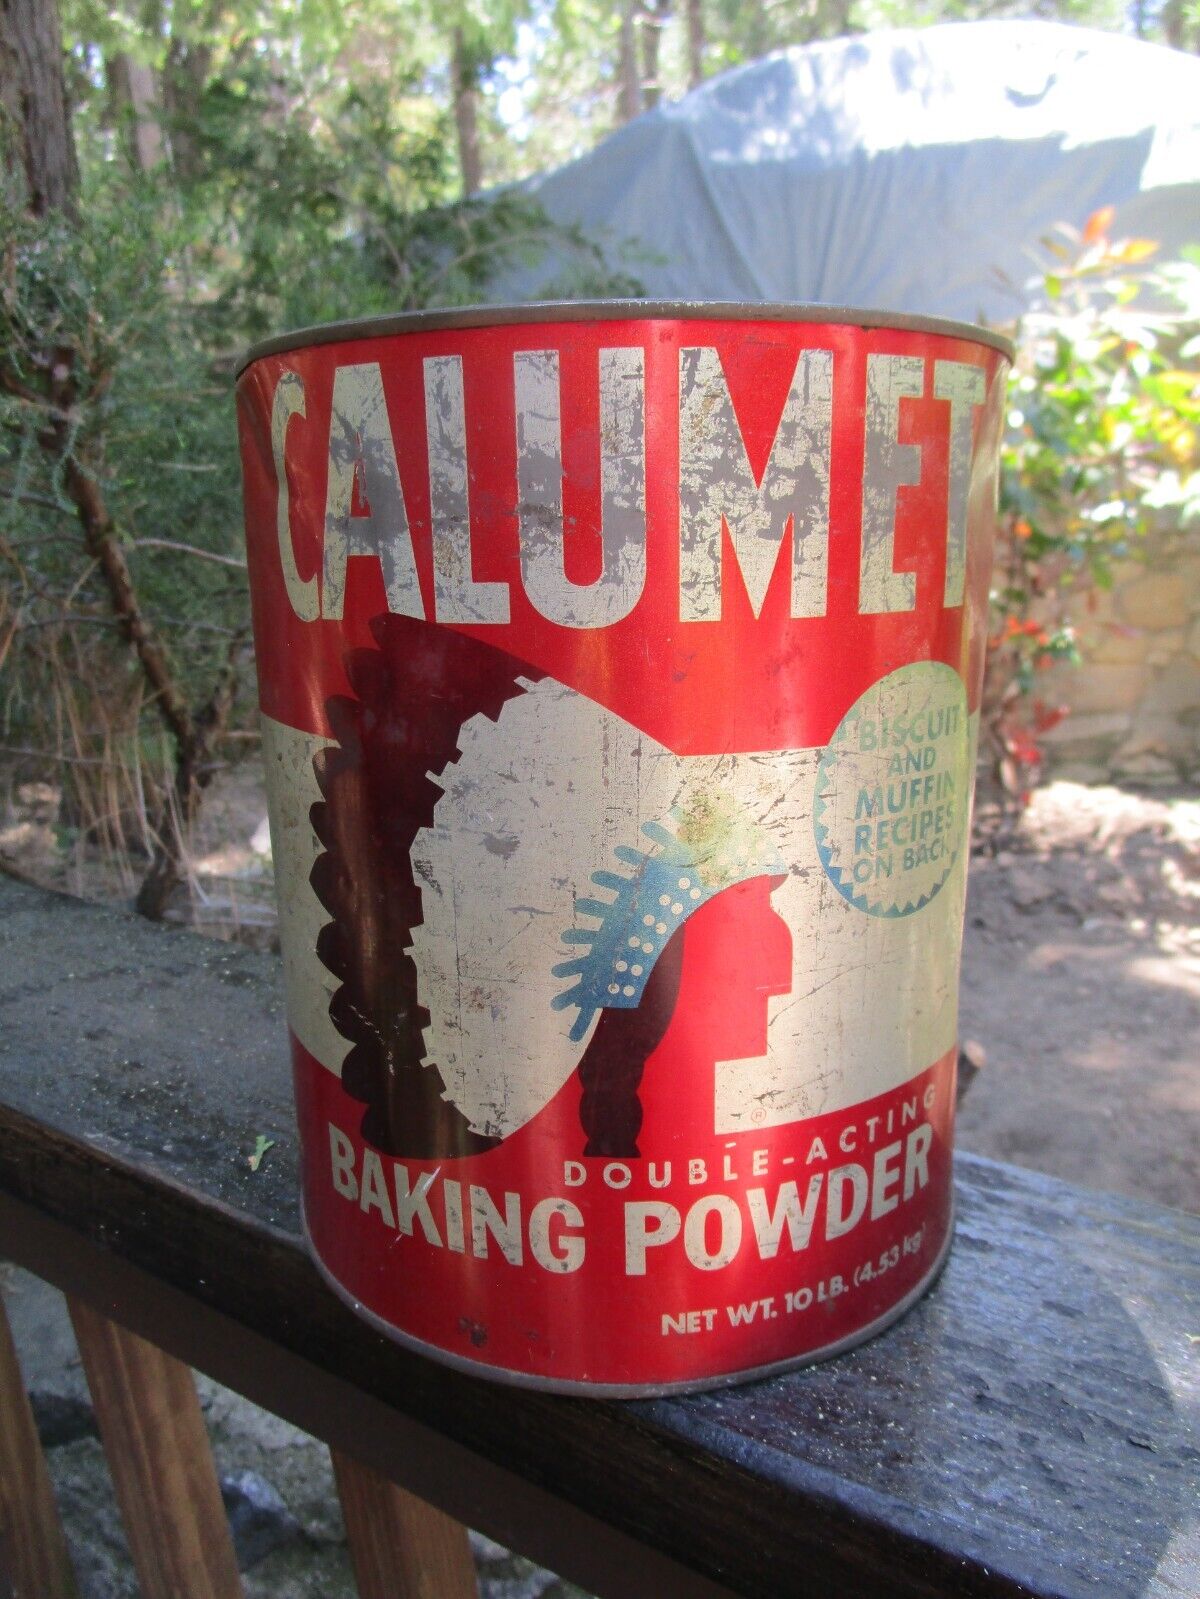 VINTAGE CALUMET DOUBLE-ACTING BAKING POWDER - Large 10 lb. Tin